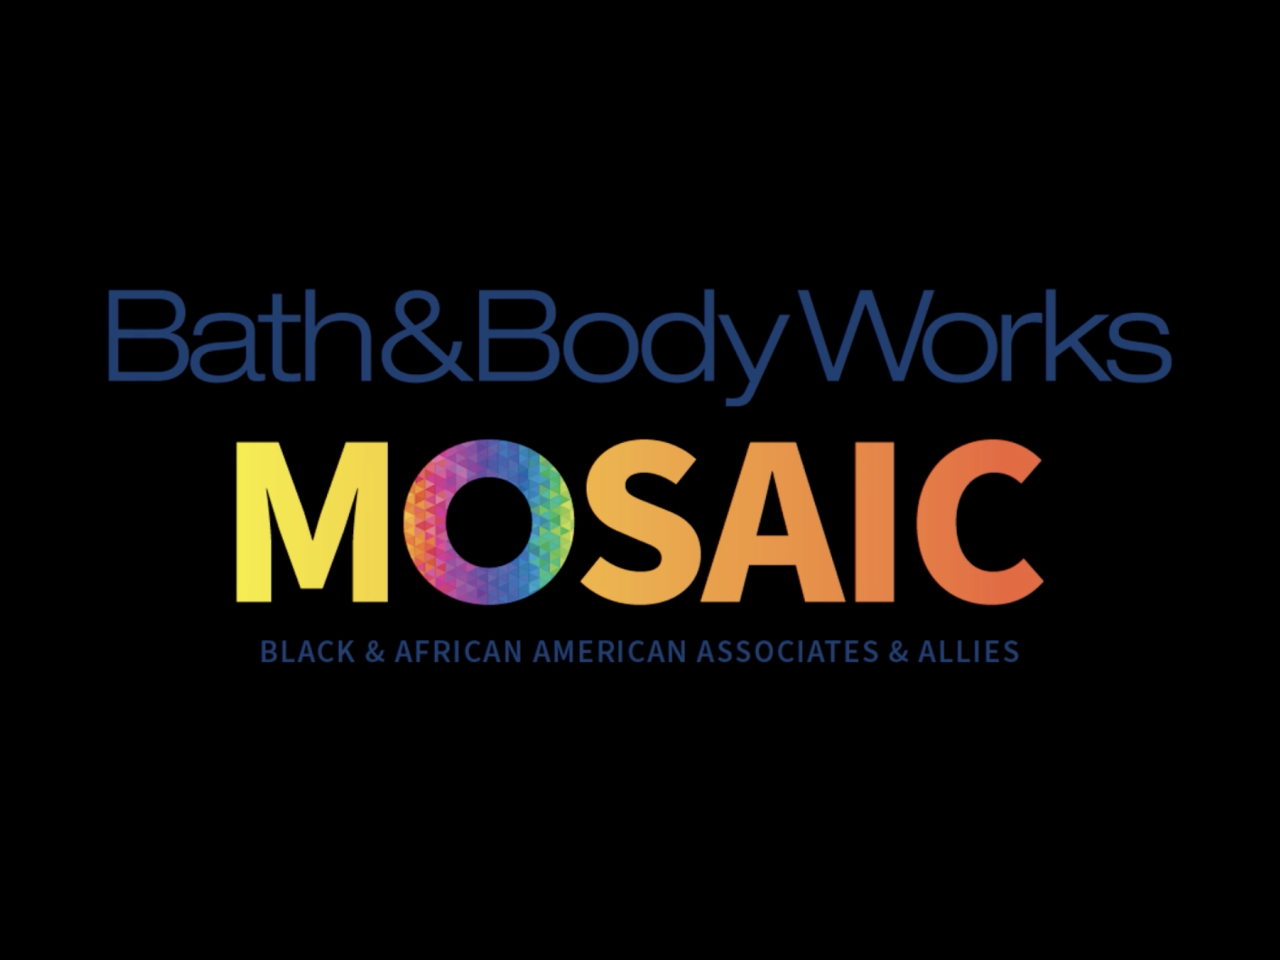 Bath & Body Works Mosaic Black & African American Associates & Allies 